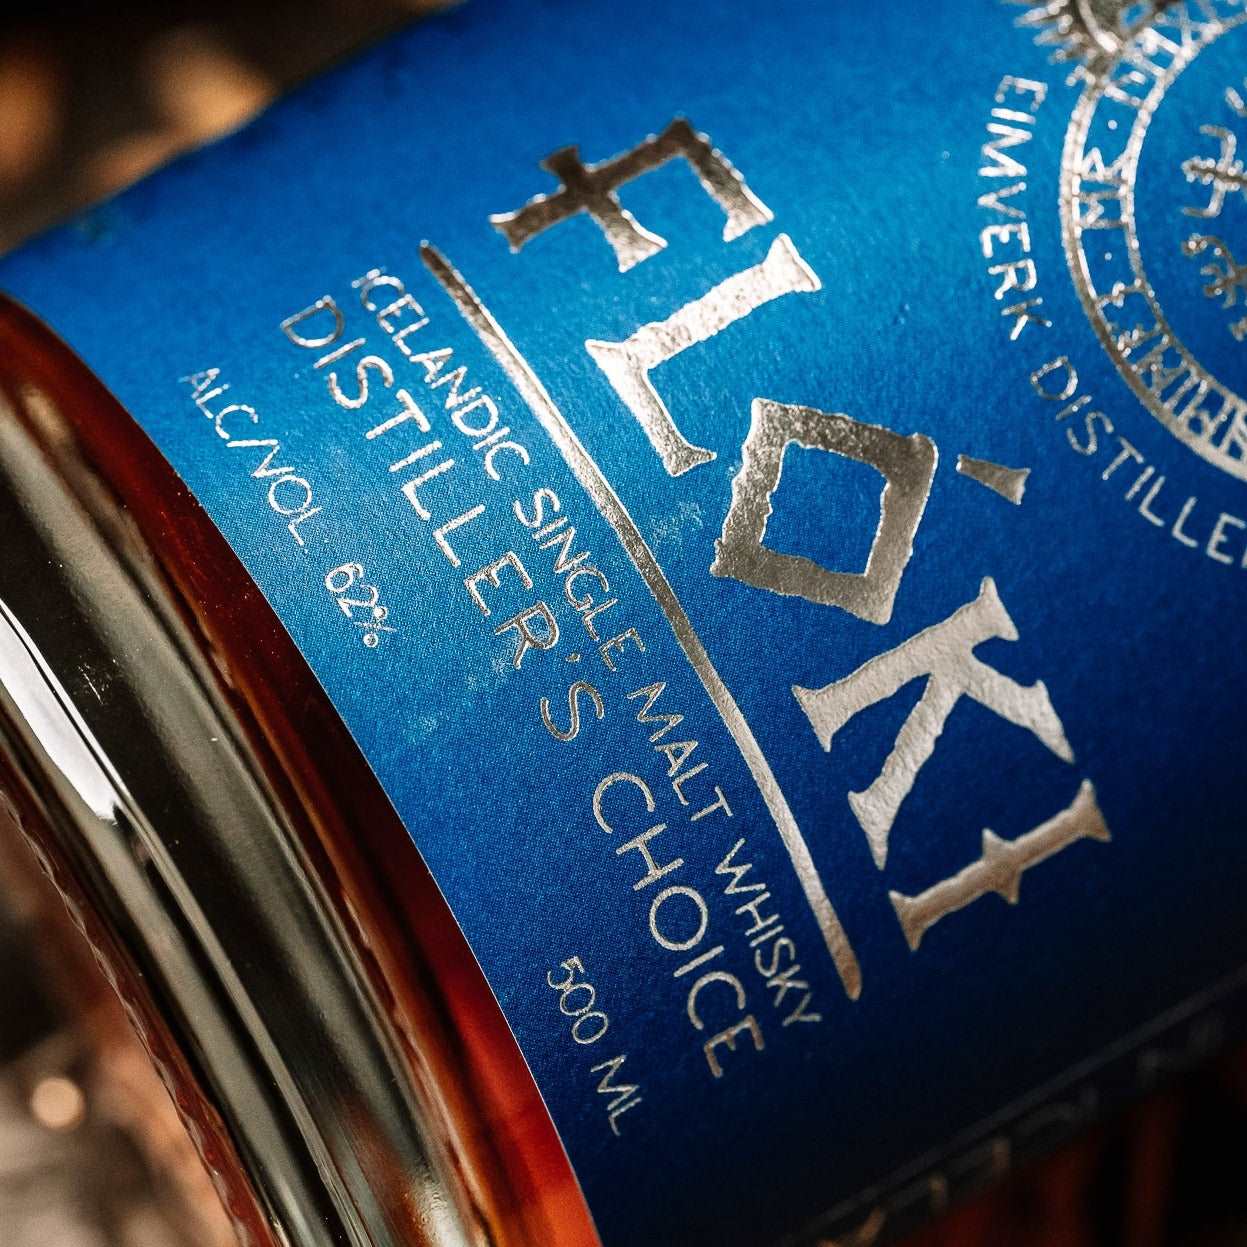 Flóki | 5 Jahre | 2016/2022 | Distiller’s Choice #397 | Icelandic Single Malt Whisky | 0,5l | 62%GET A BOTTLE